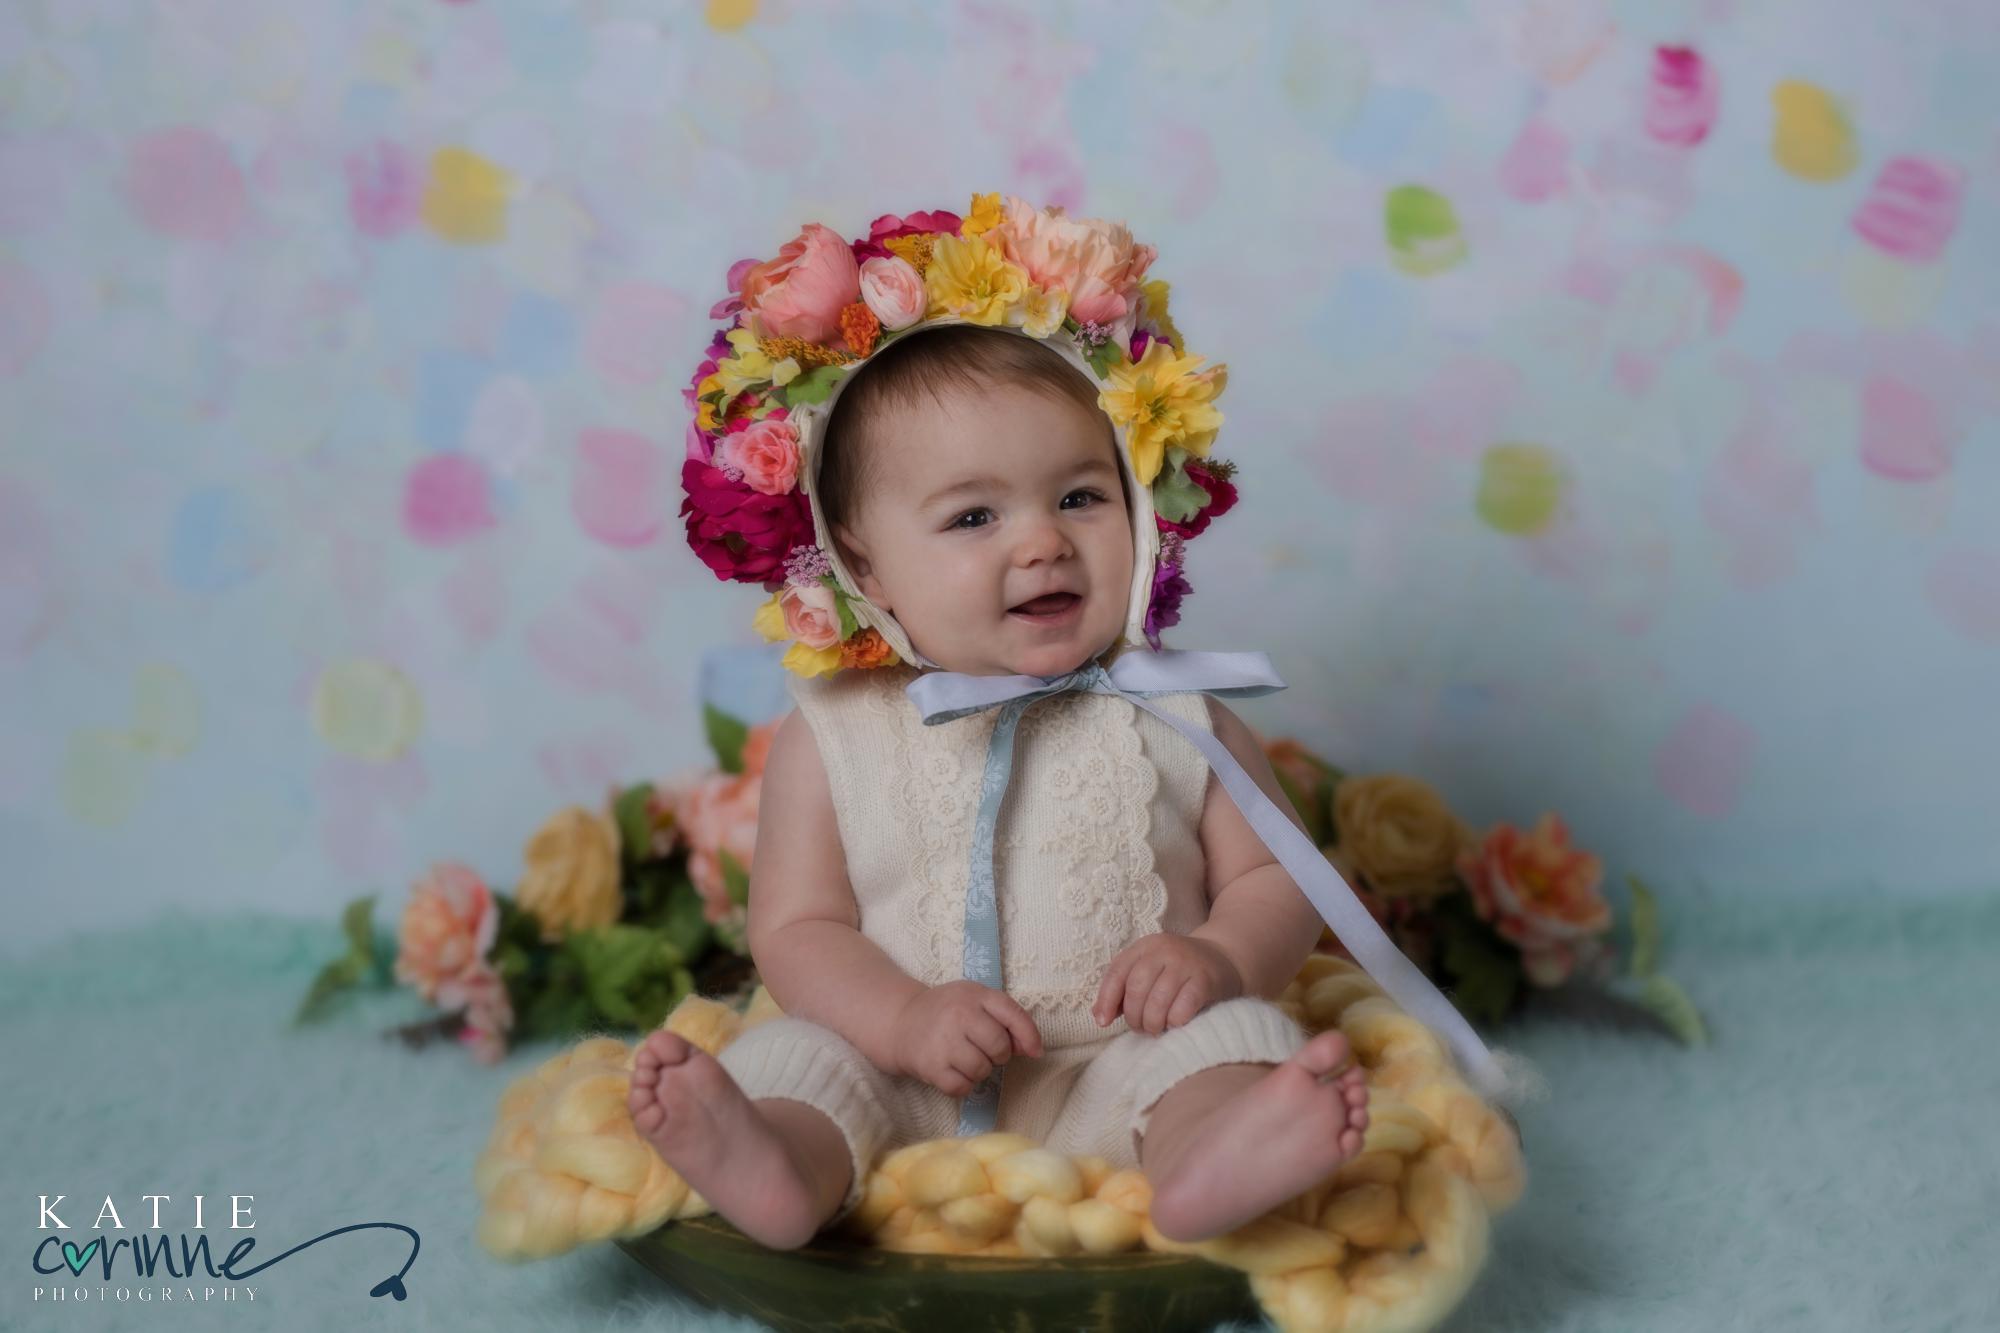 Baby in Floral bonnet